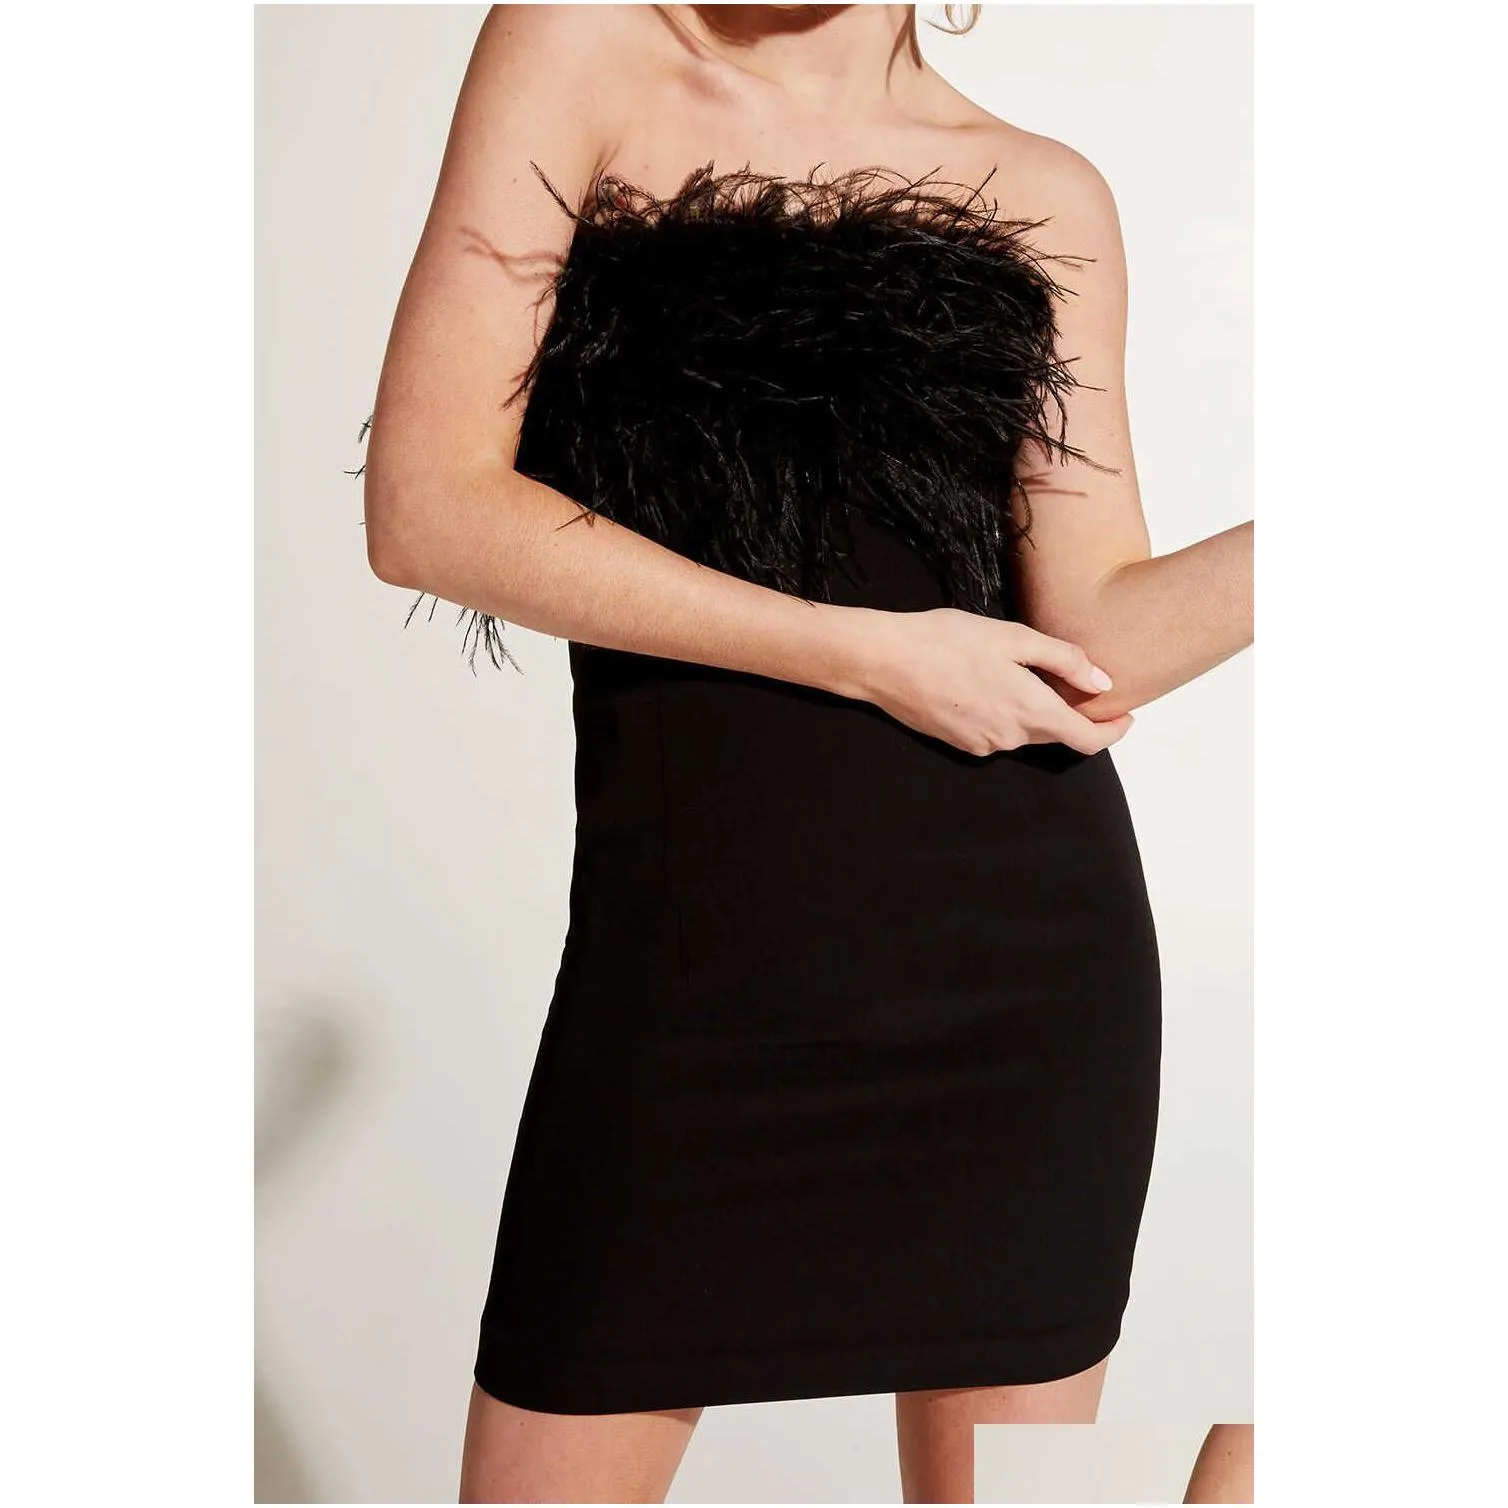 2022 summer new women`s strap dress black feather decoration off shoulder sleeveless slim fitting mini party evening dress